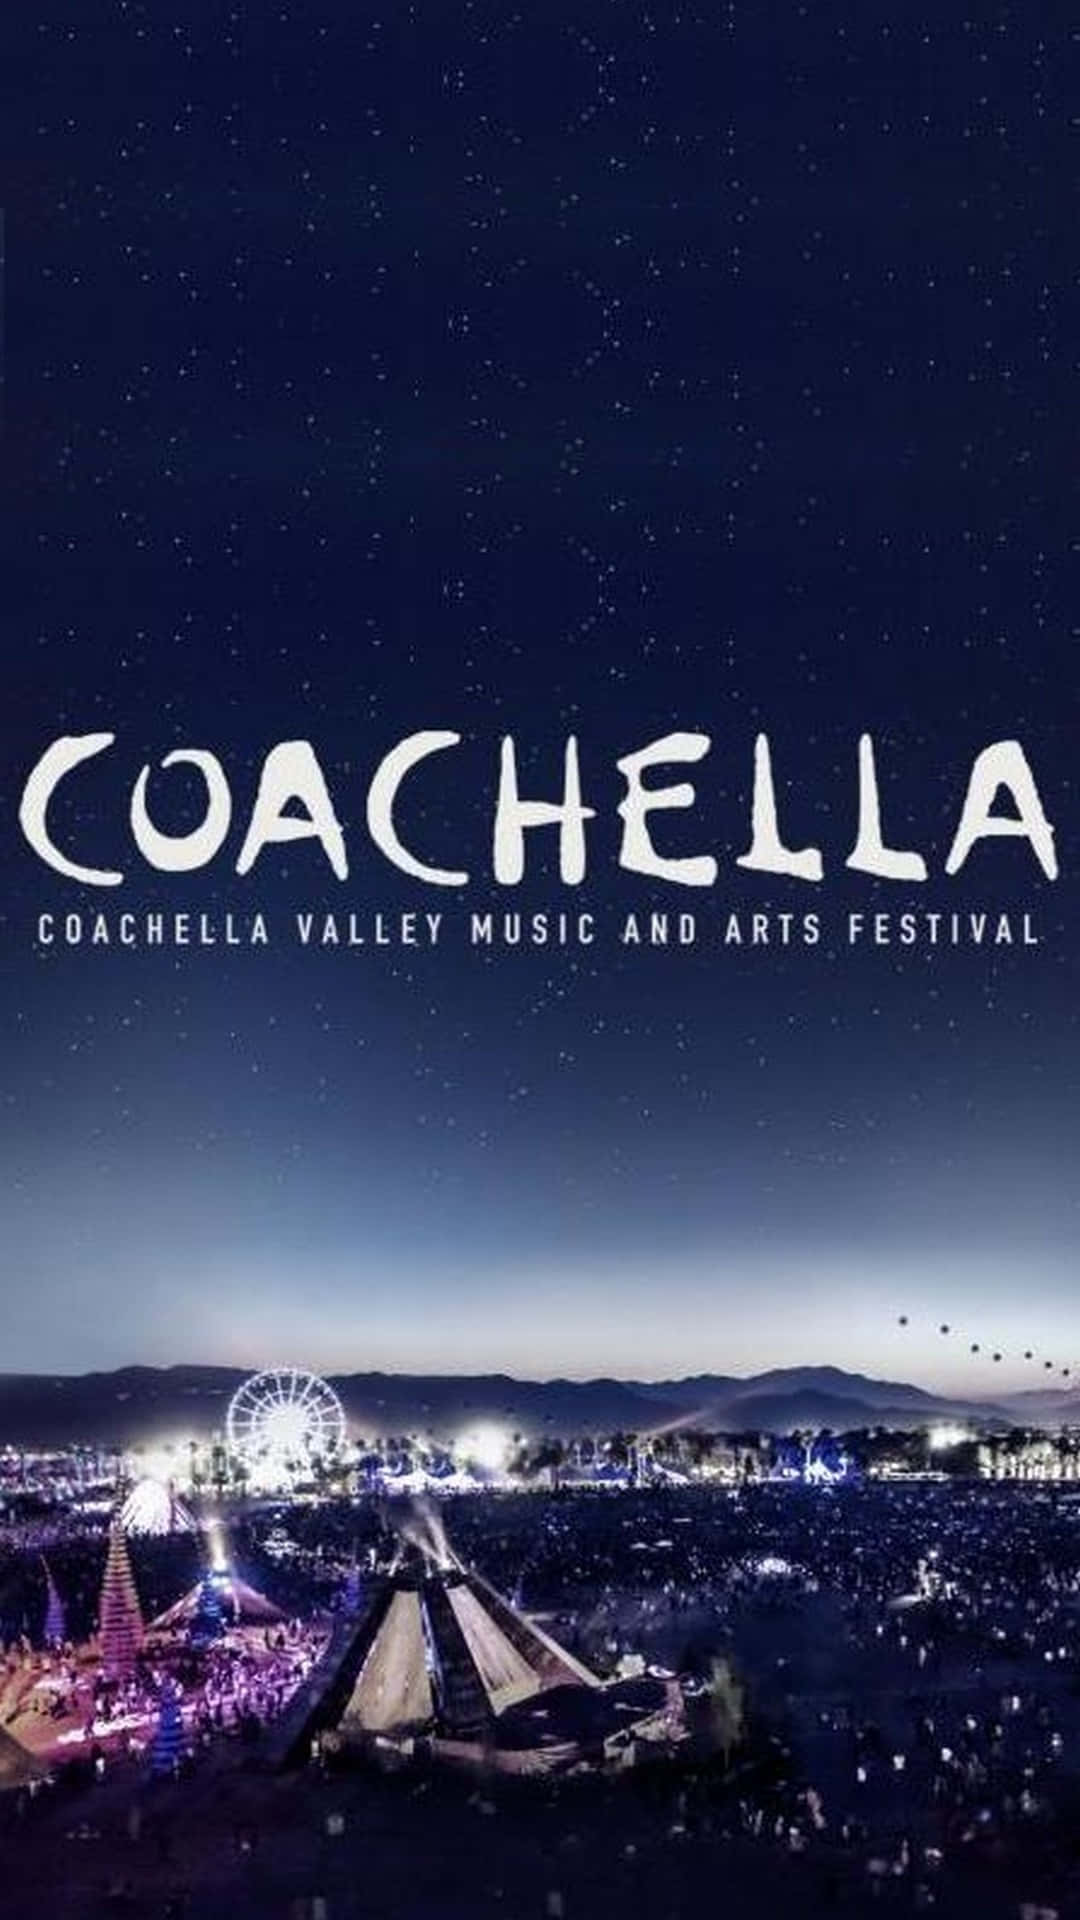 Coachella Valley Music And Arts Festival